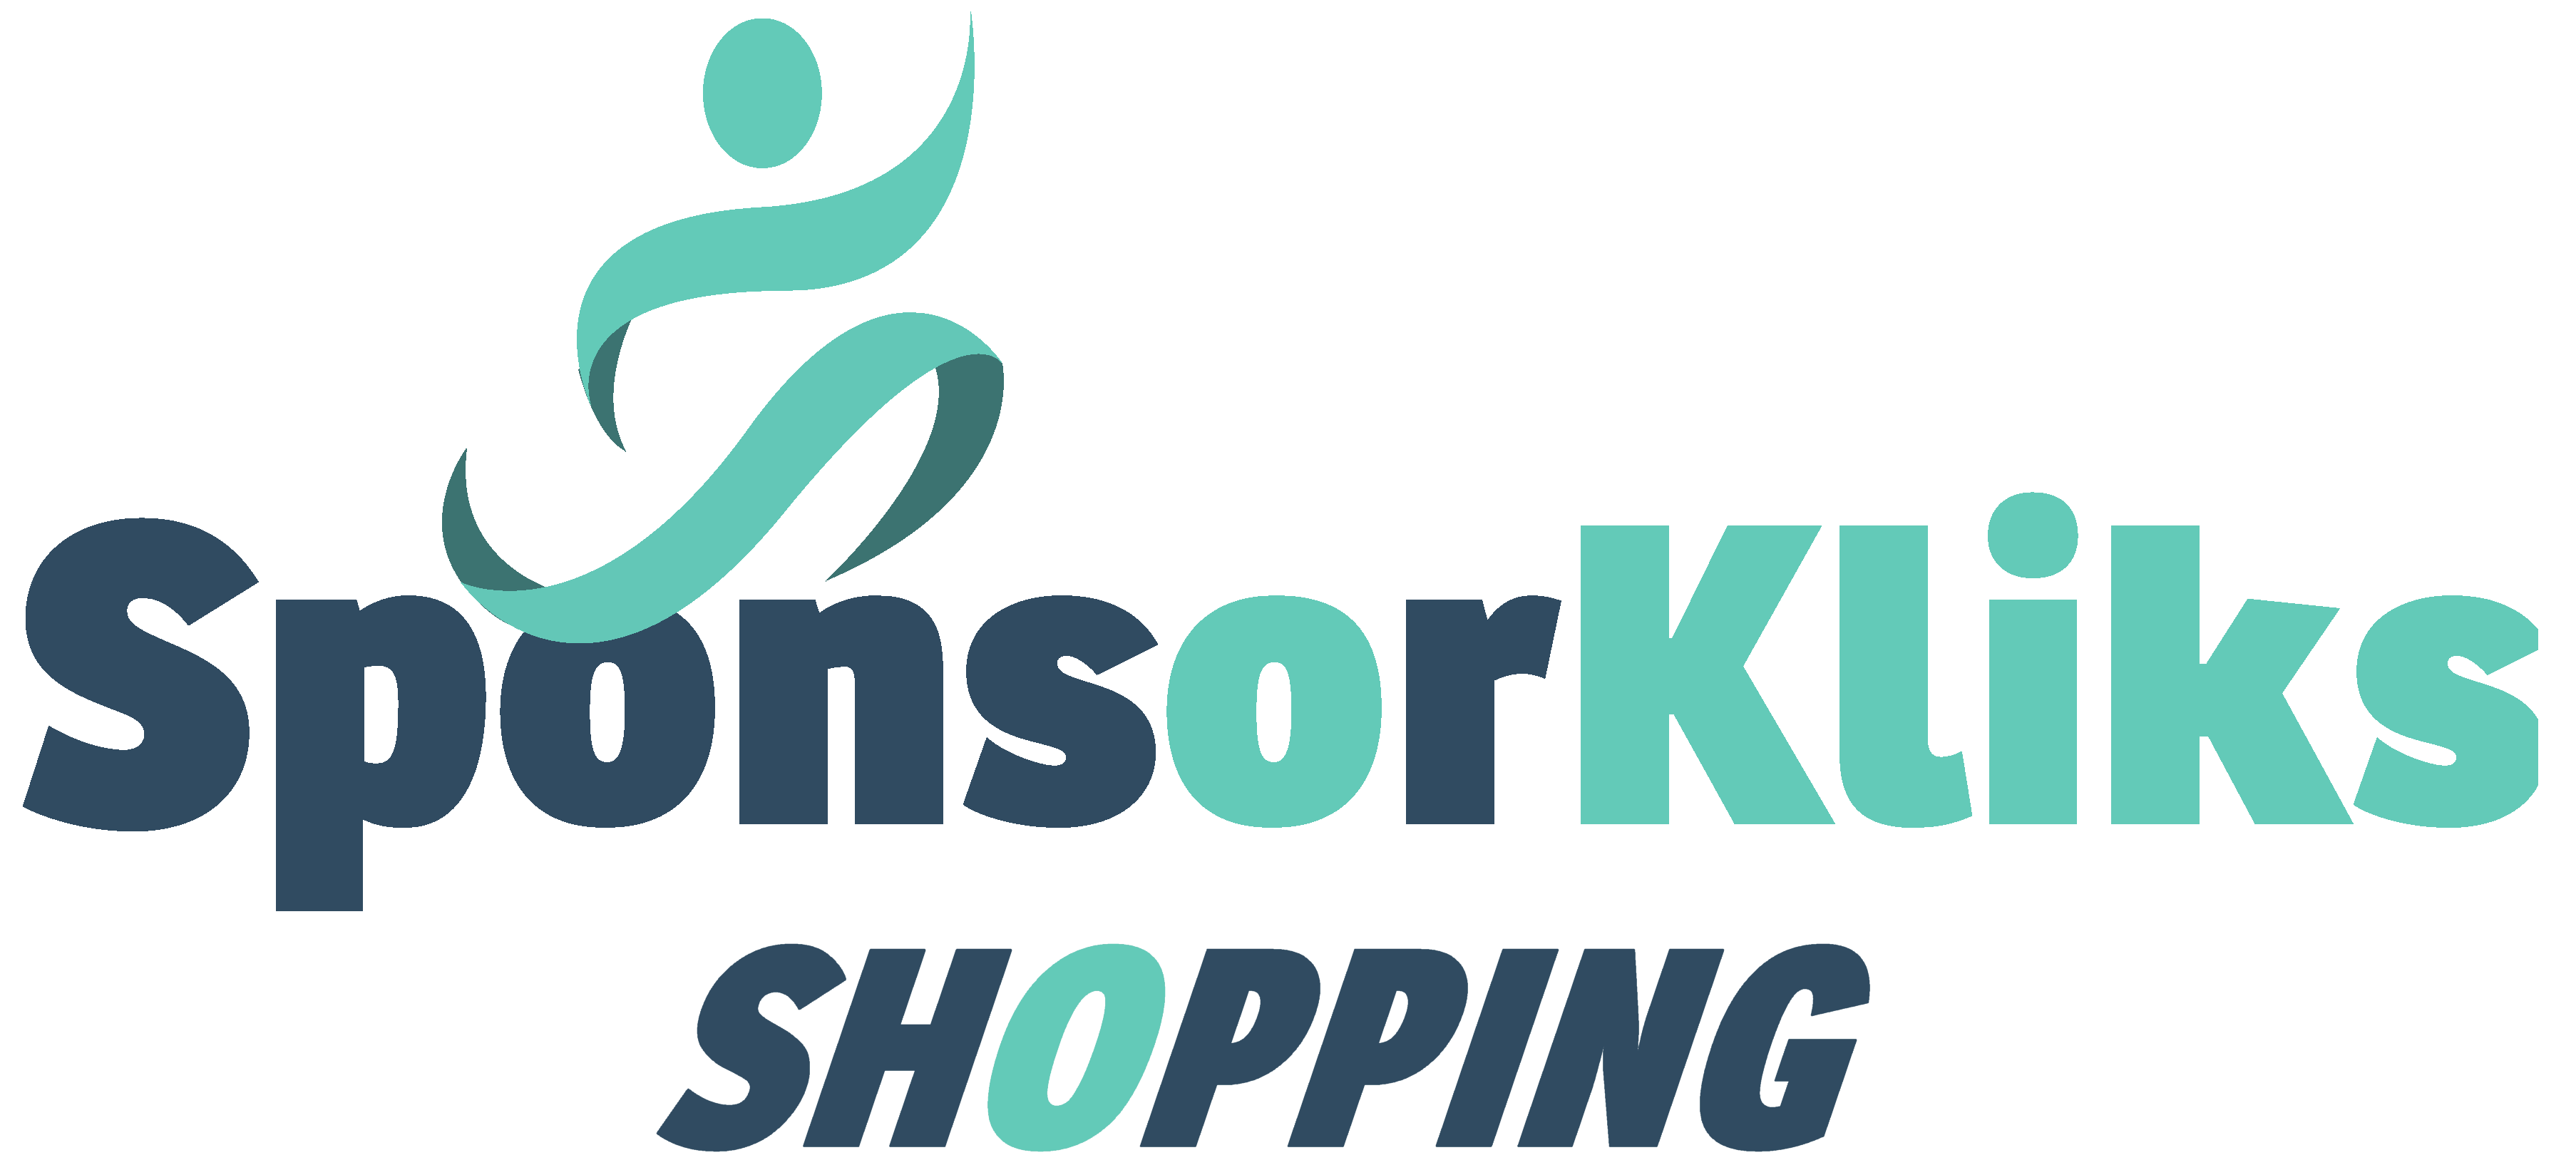 sponsorkliks-shopping-logo-cropped